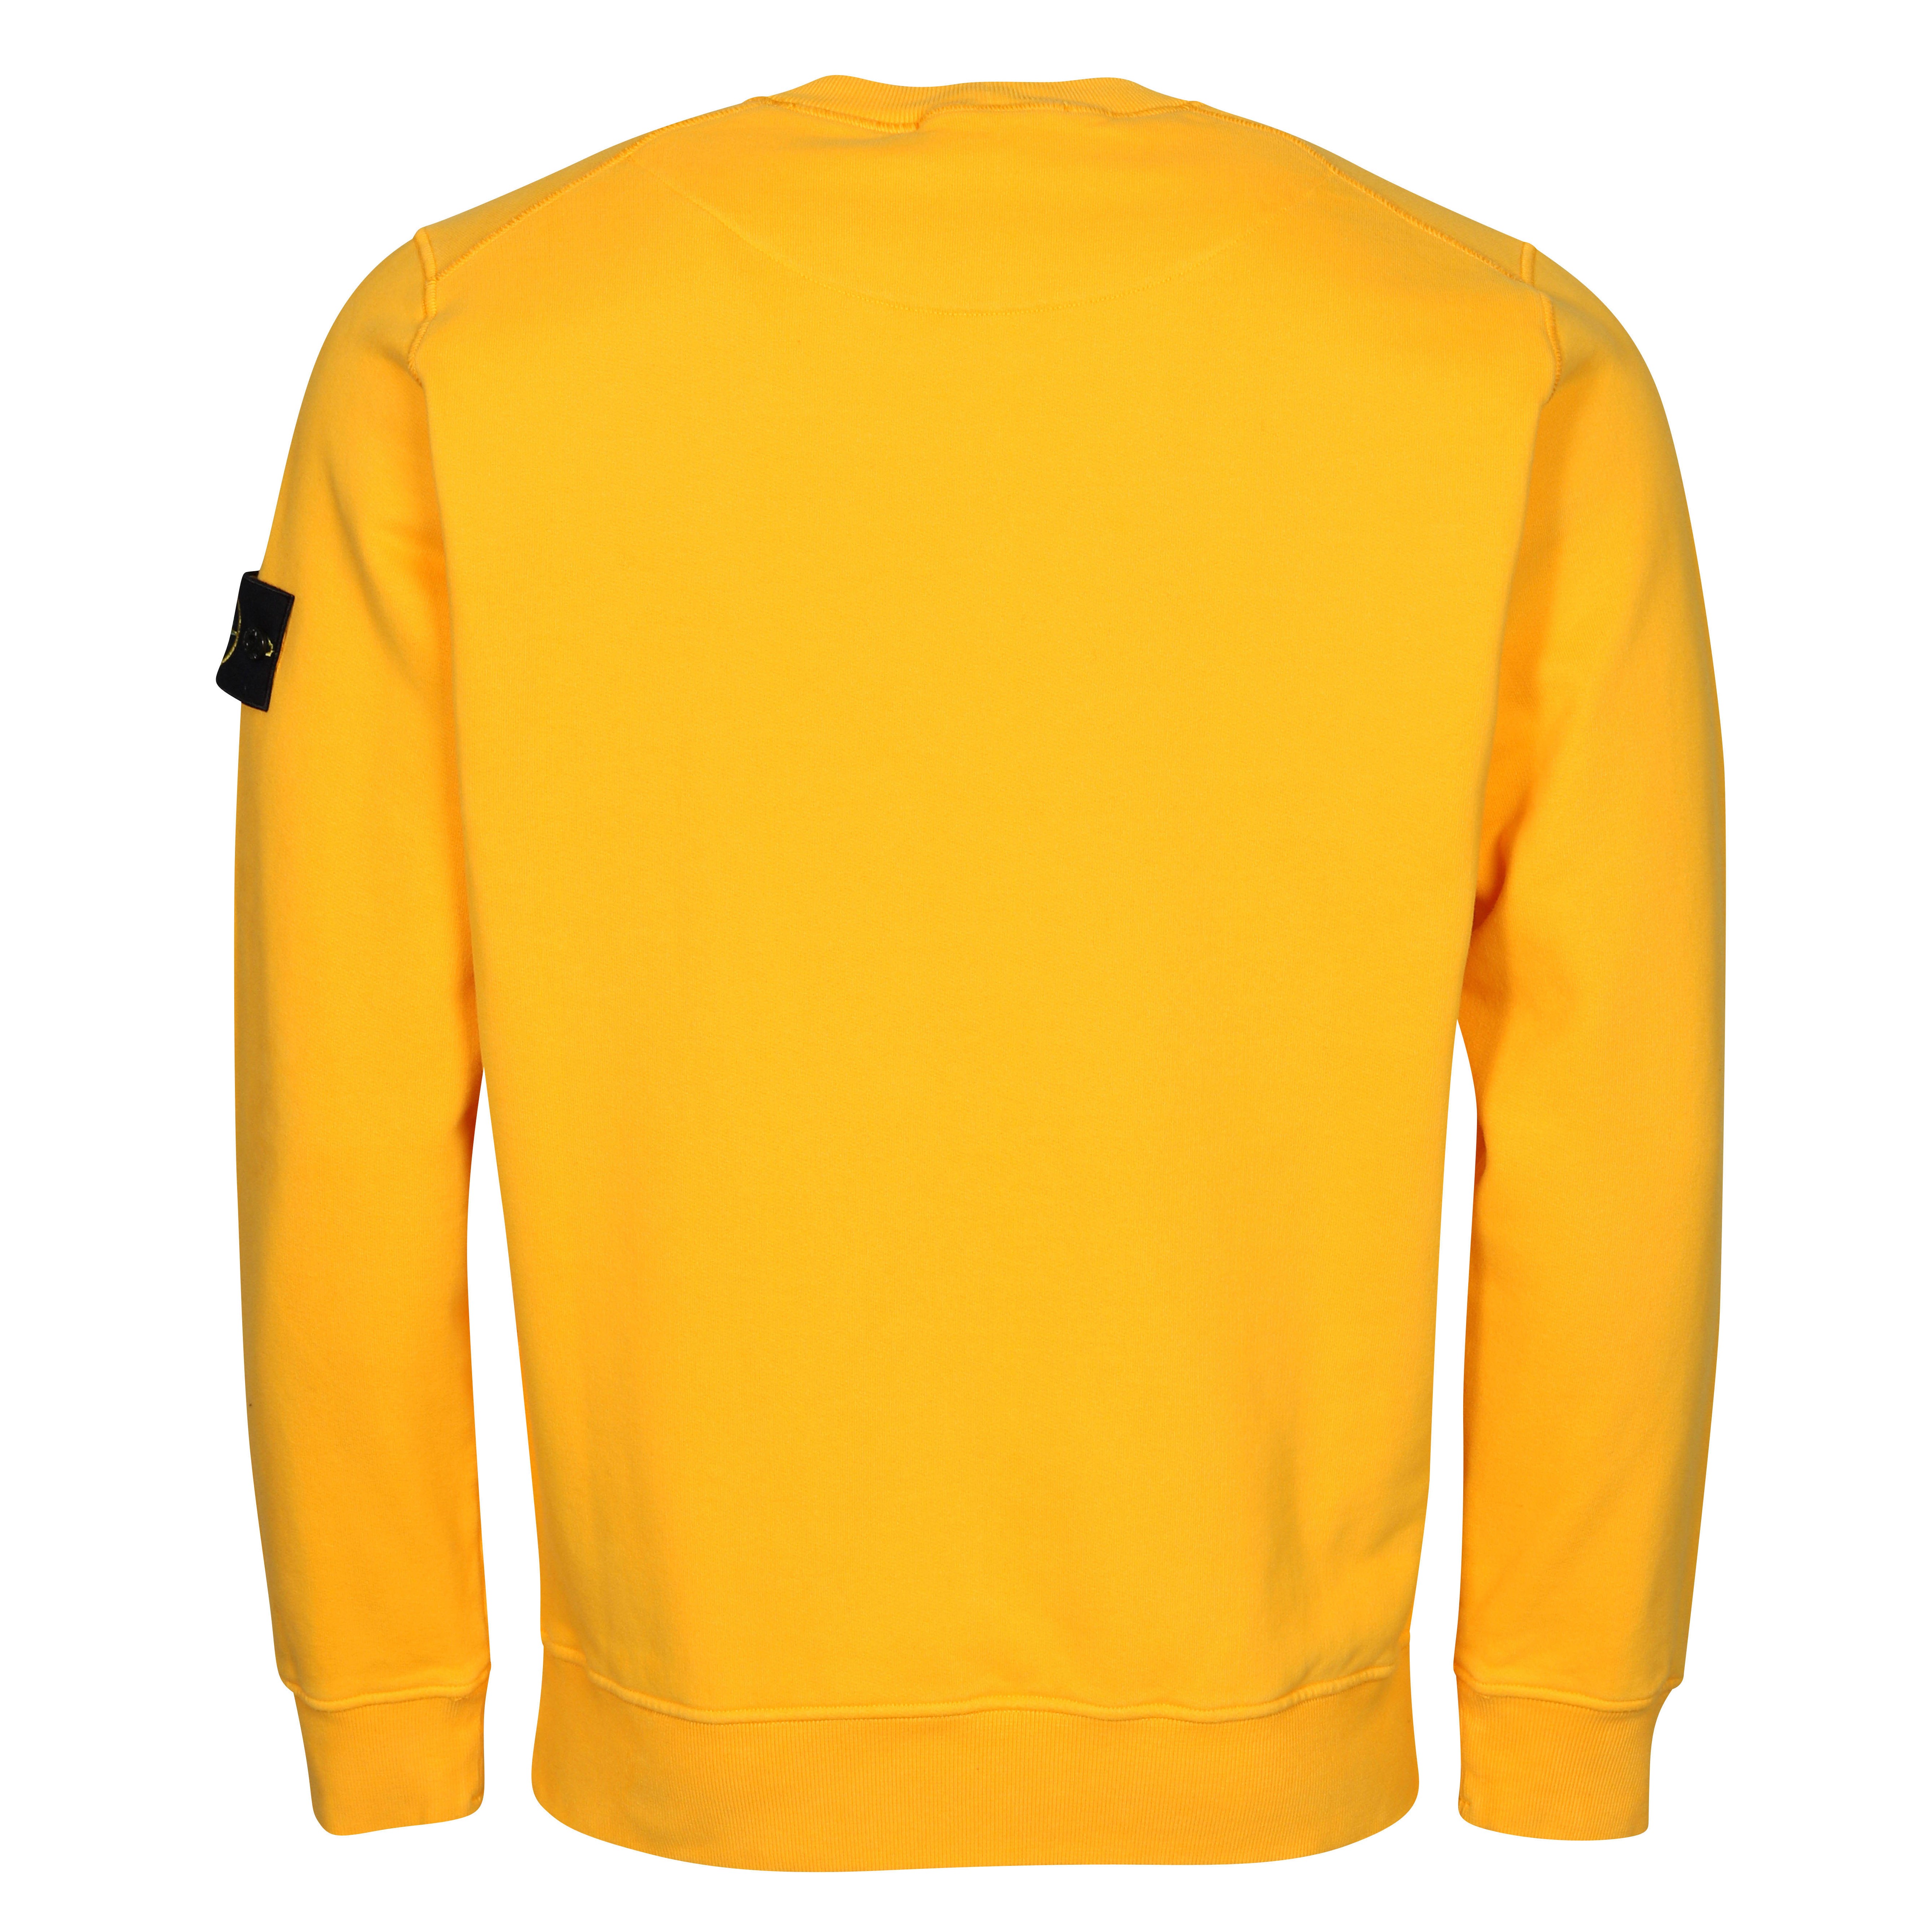 Stone Island Sweatshirt in Yellow